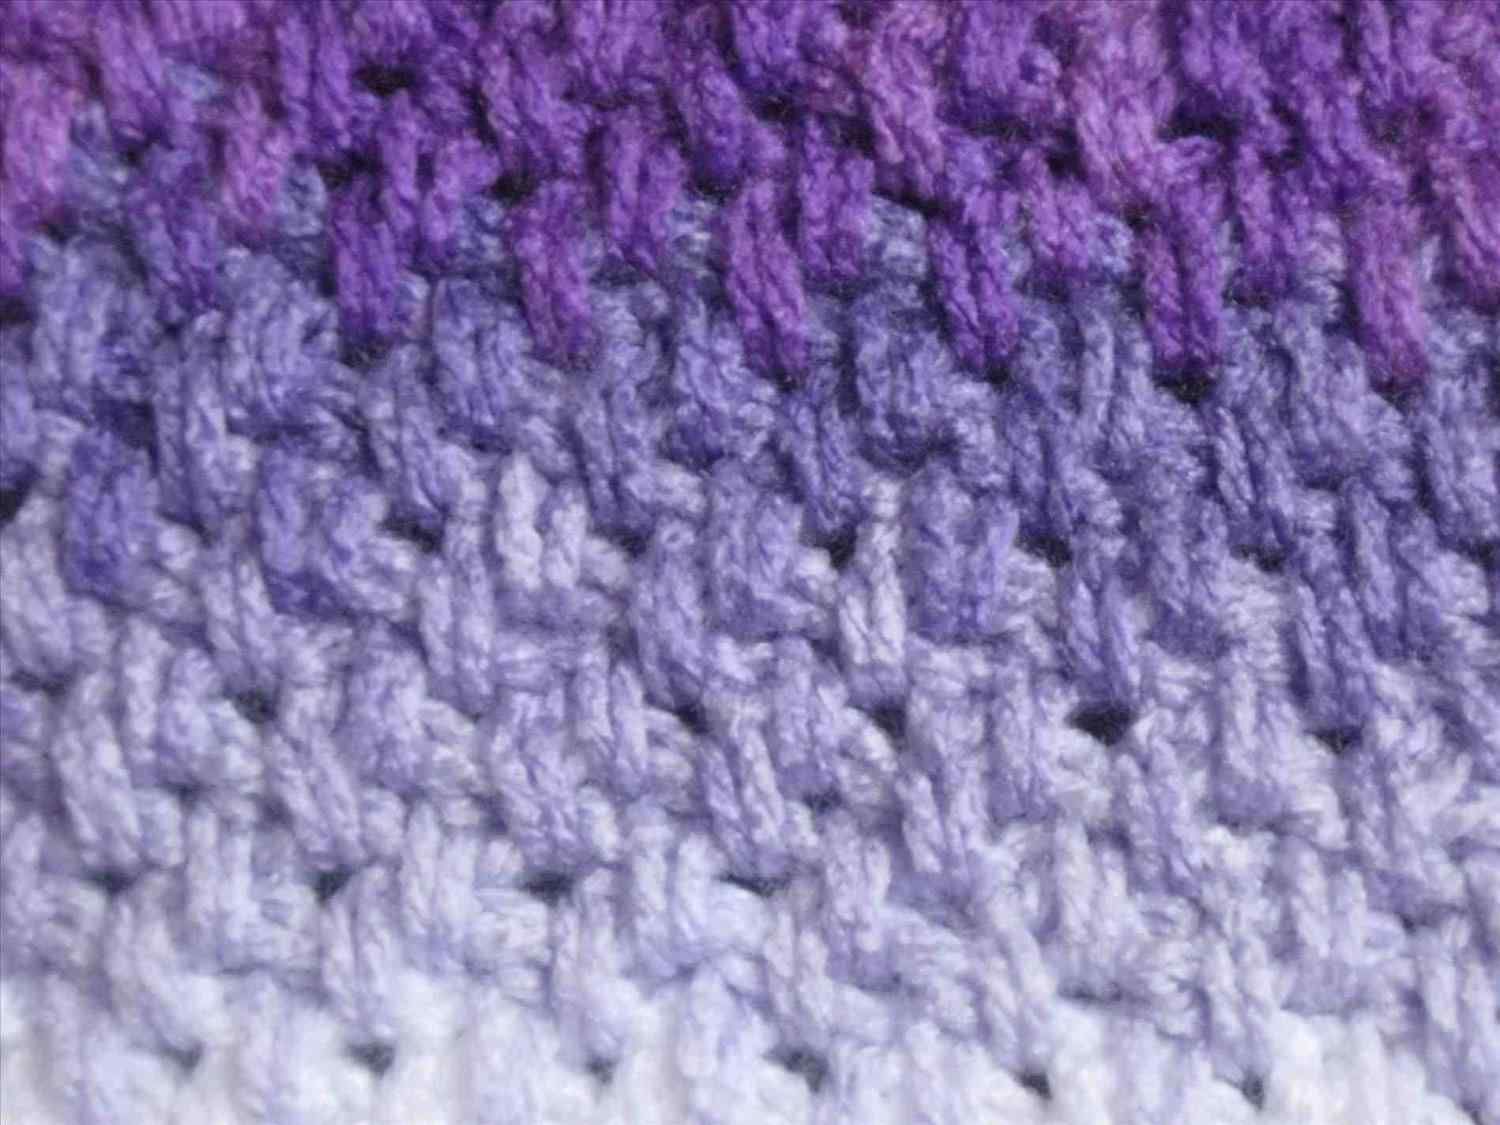 Unusual Crochet Patterns U Do Crewrhmakeanddocrewcom Cool Pictures Of Unique Patterns